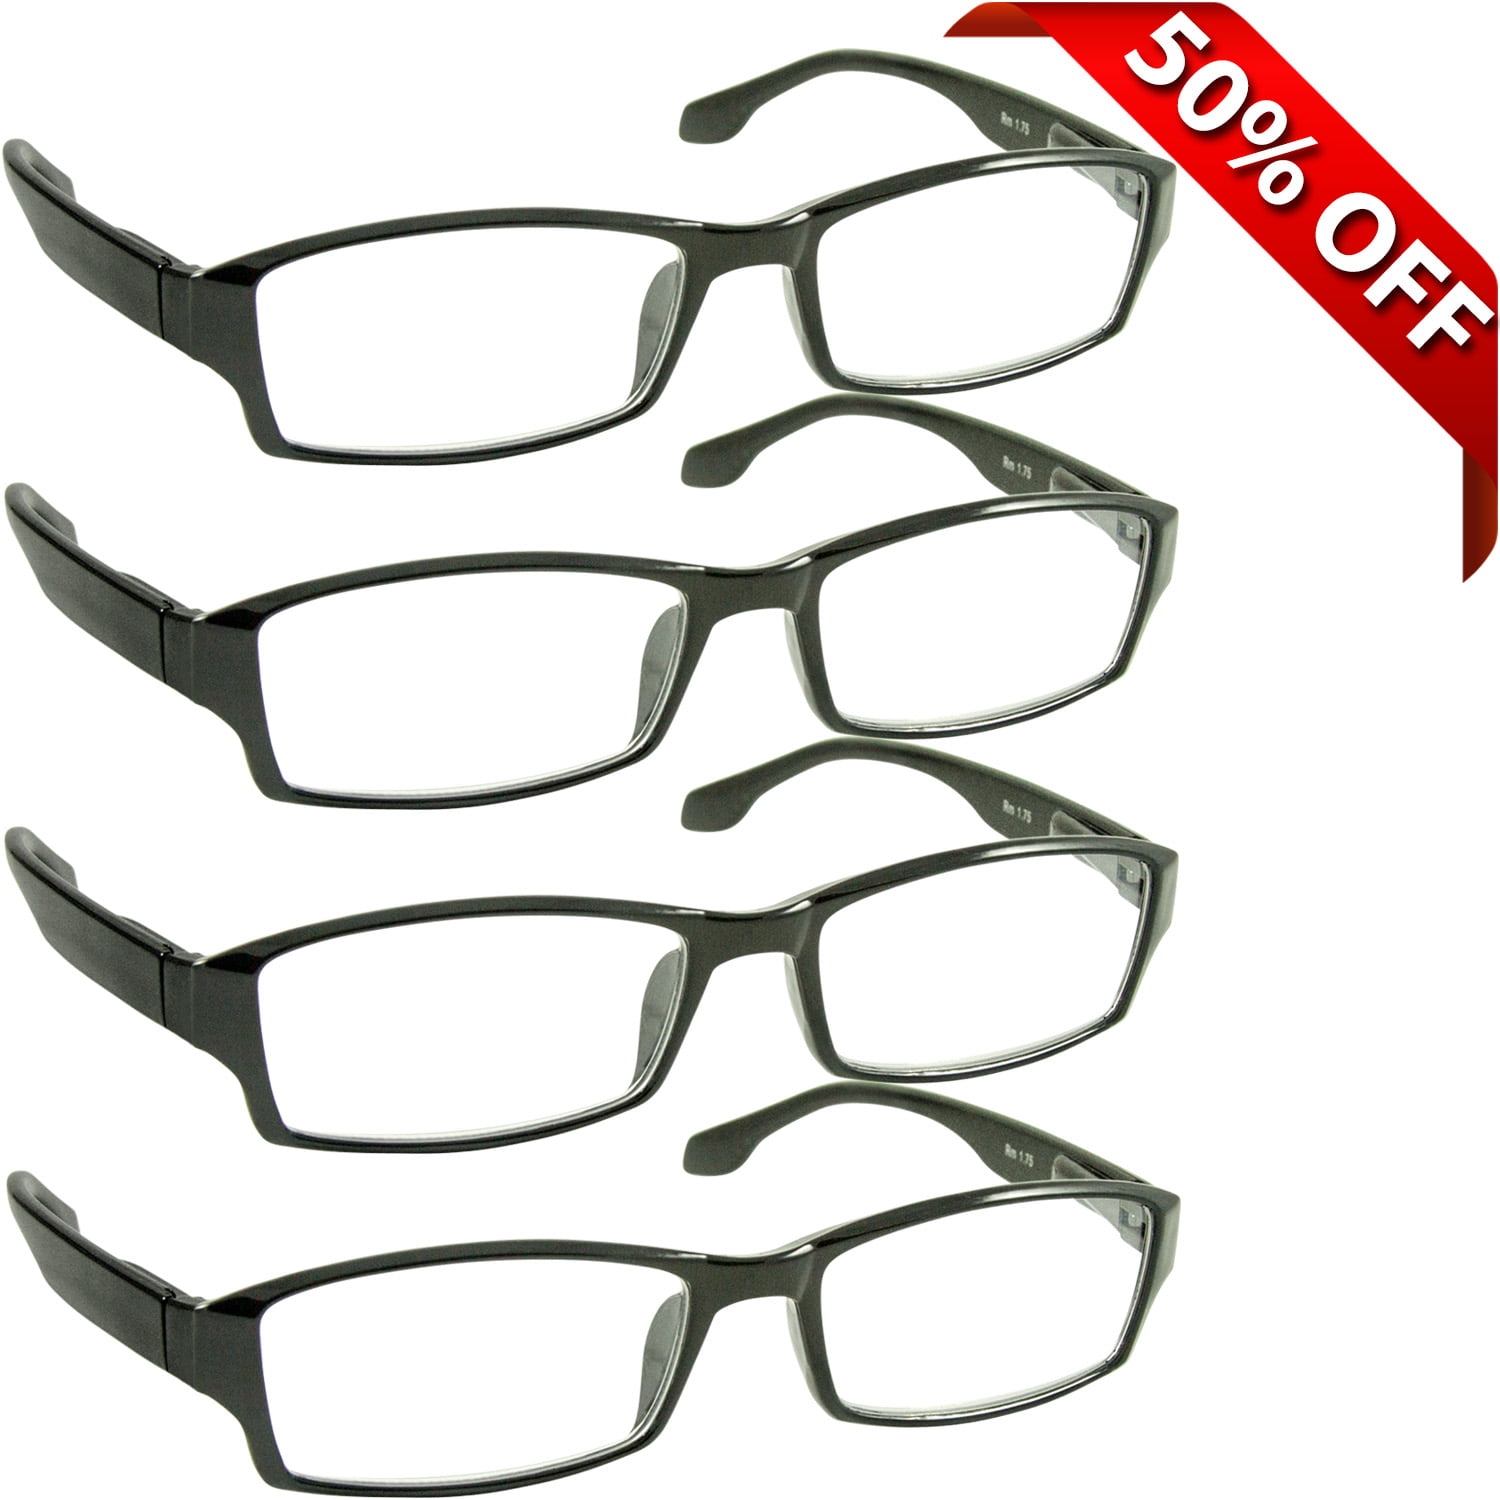 TruVision Readers Unisex Rectangle Frame 6 00 Reading Glasses 4 Pack Walmart